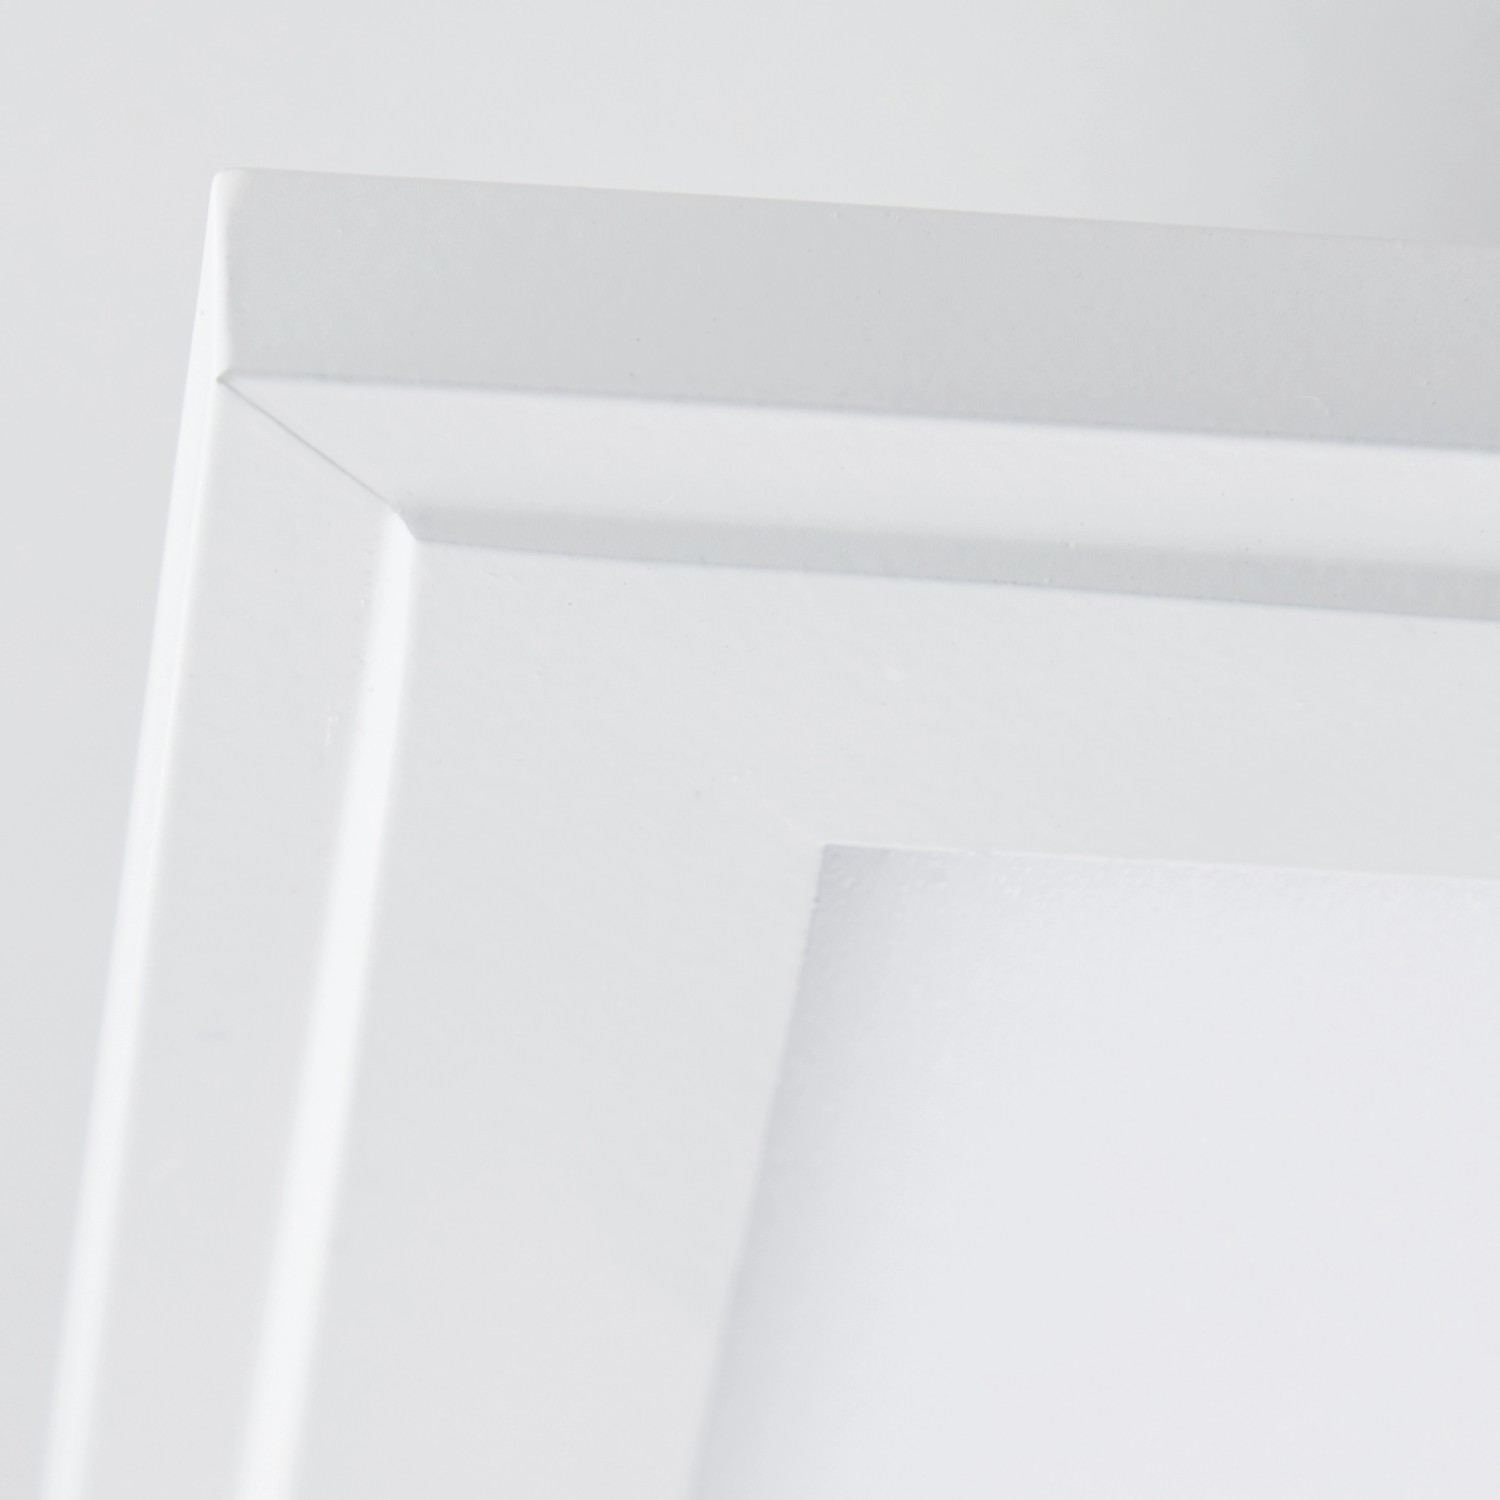 Brilliant LED-Deckenaufbau-Paneel Allie 40 cm x 40 cm Weiß kaufen bei OBI